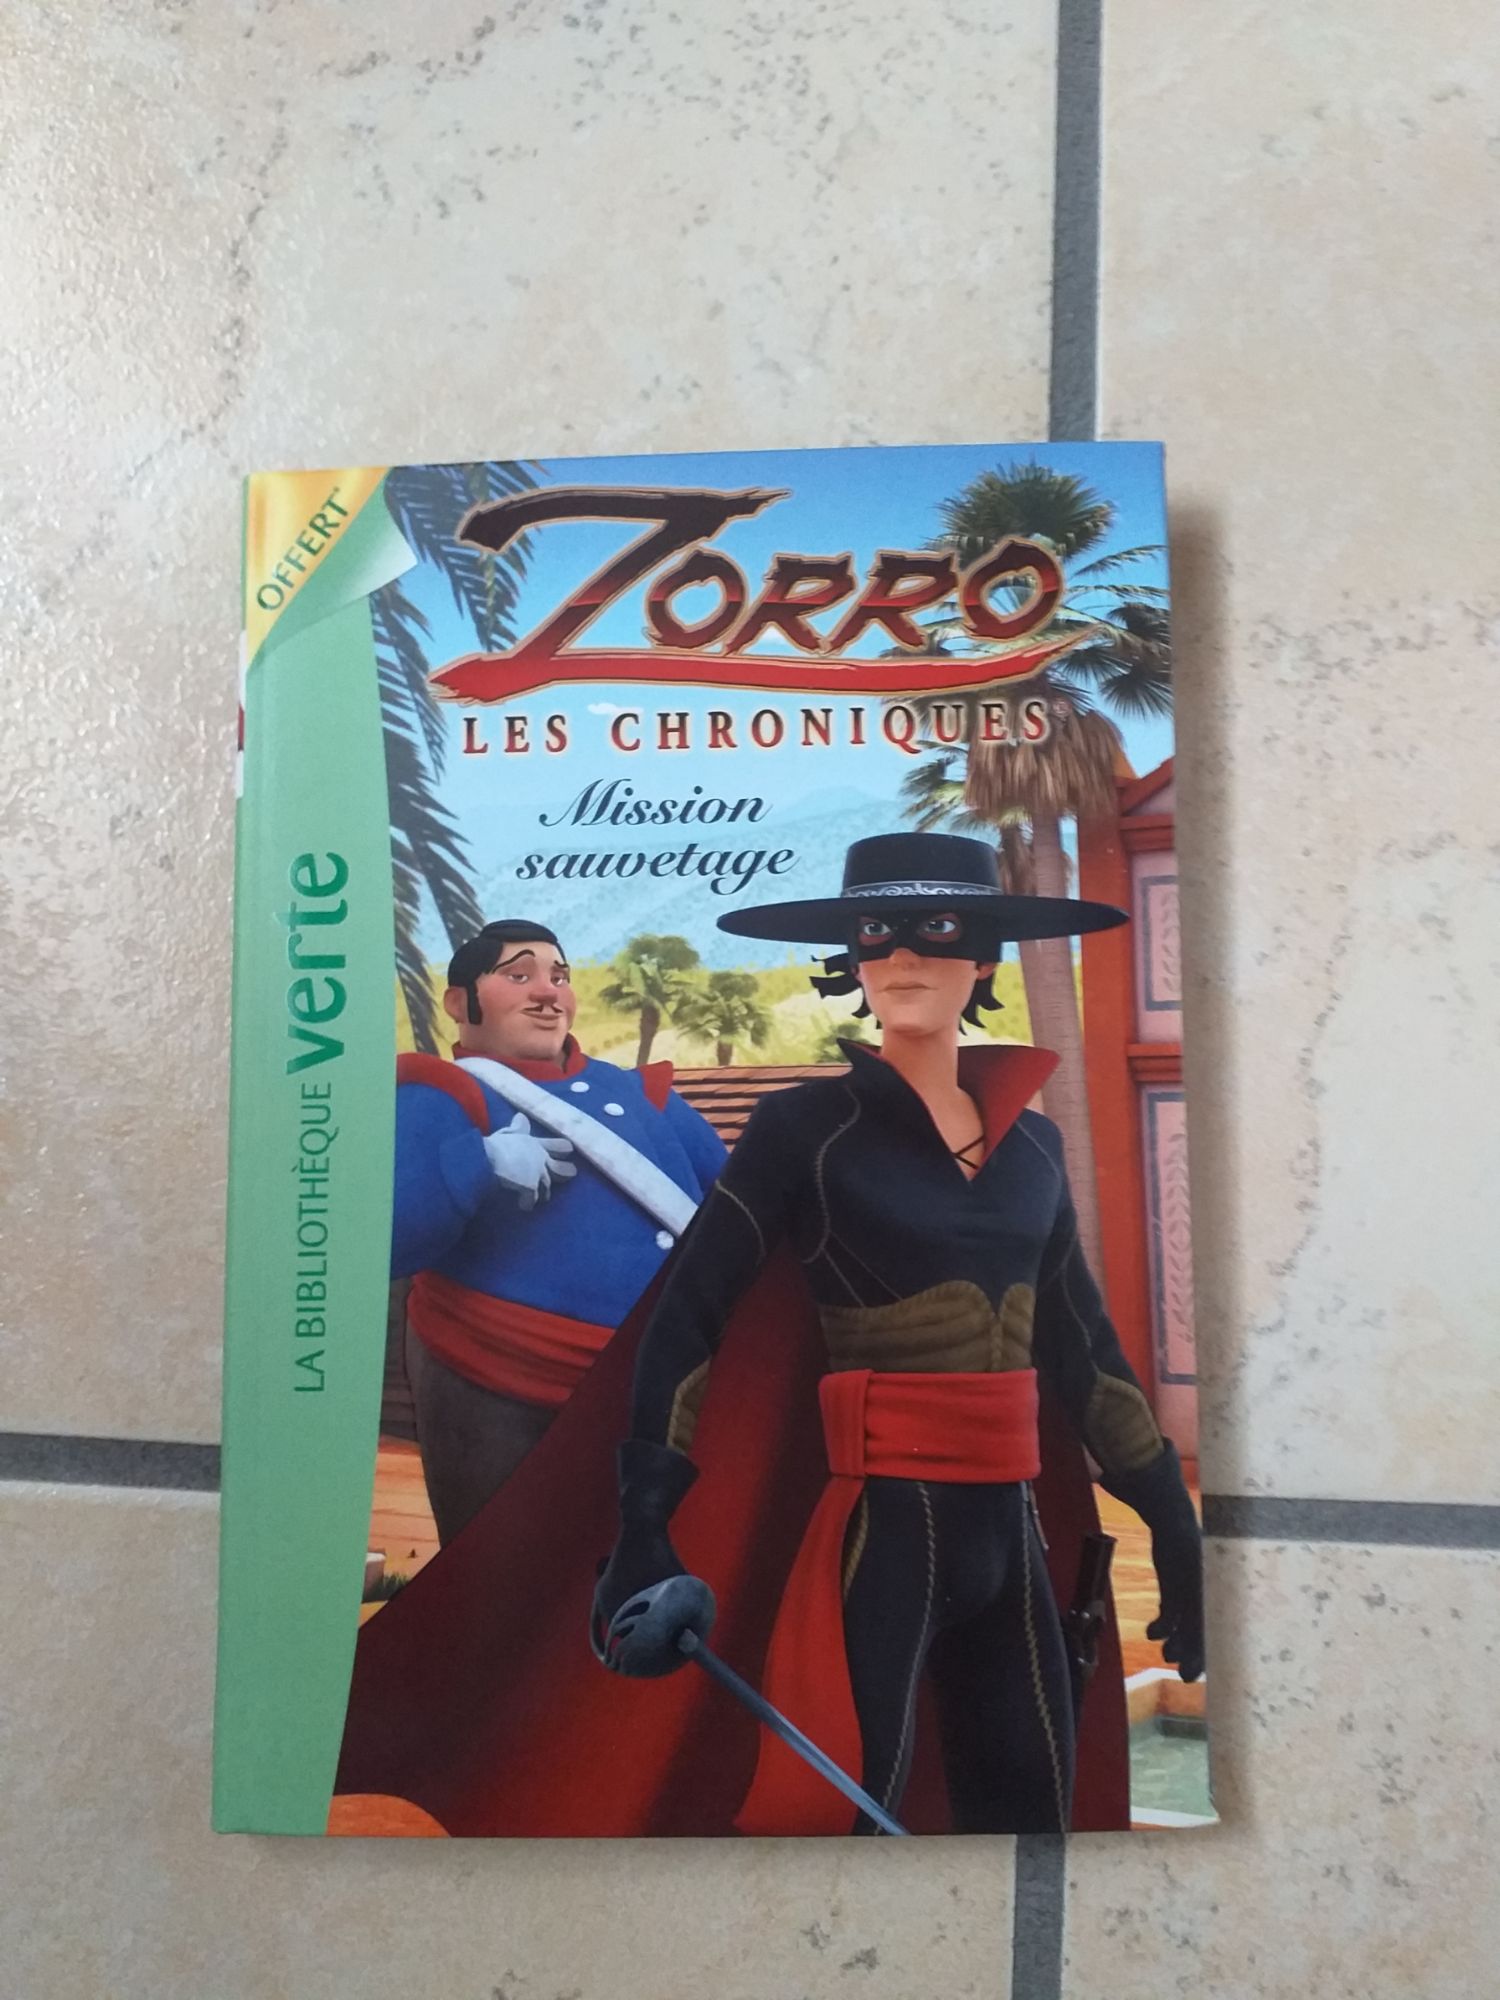 Zorro - Les chroniques - Mission sauvetage